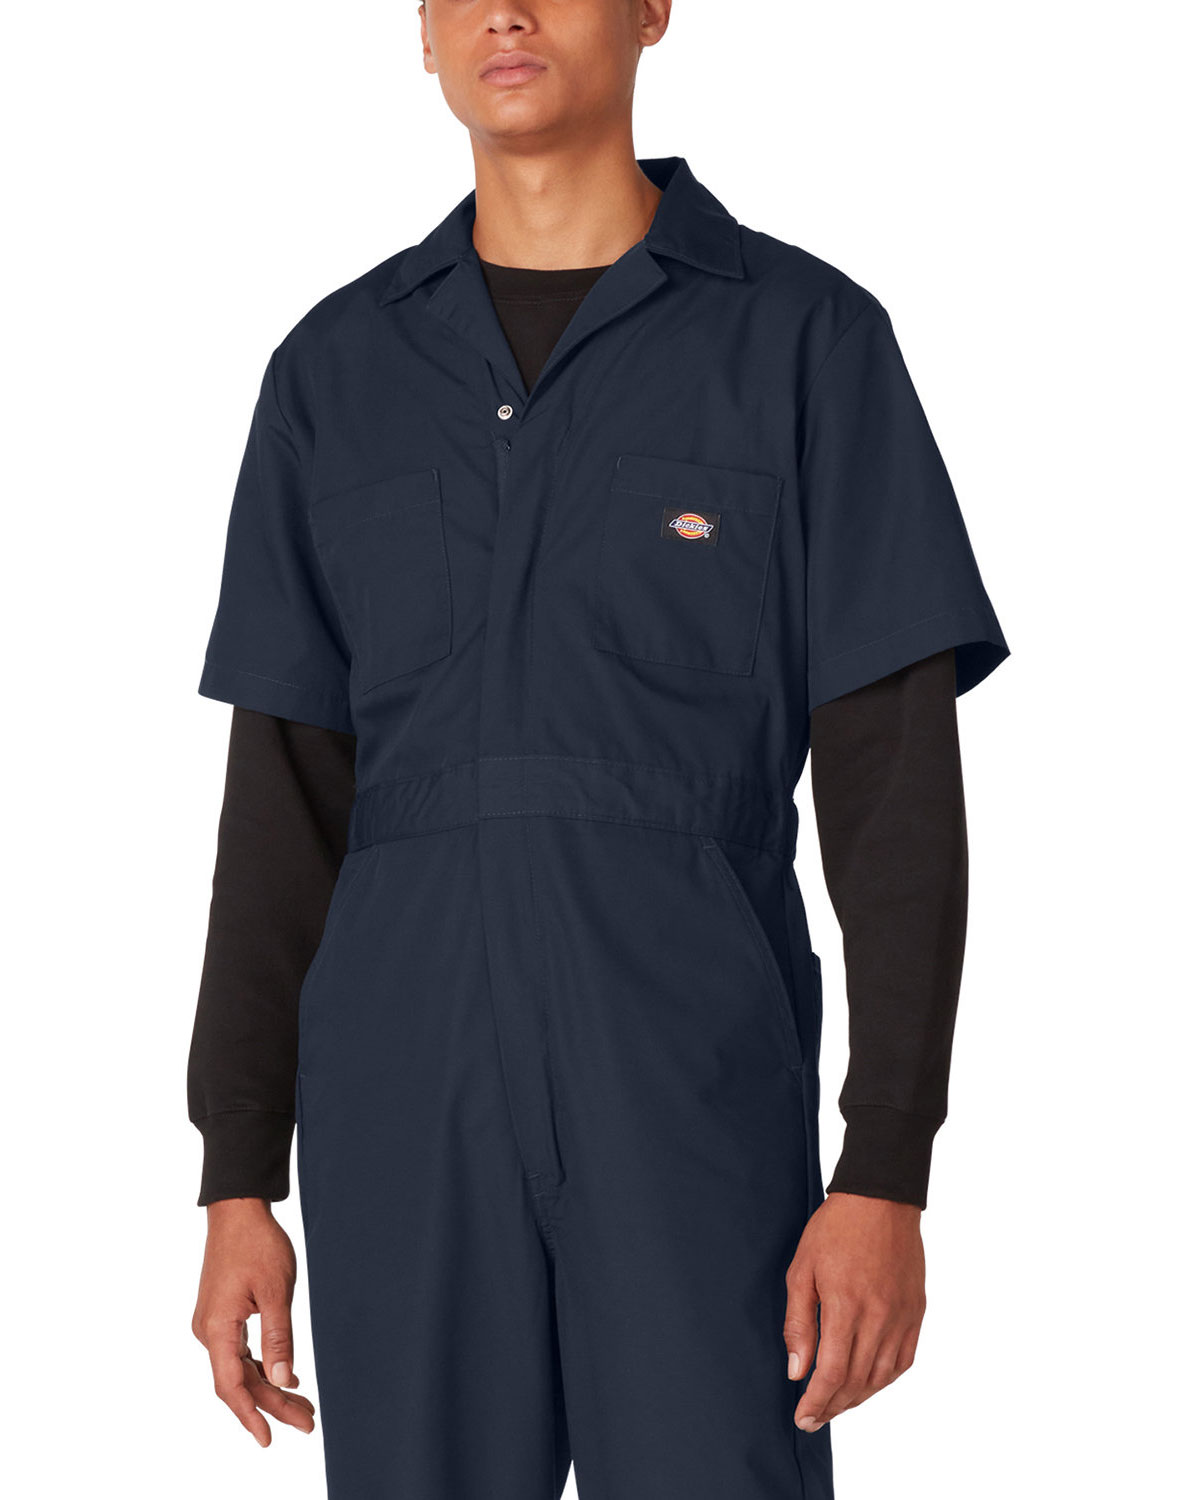 Dickies Workwear 33999 Men 5 oz. Short-Sleeve Coverall at Apparelstation